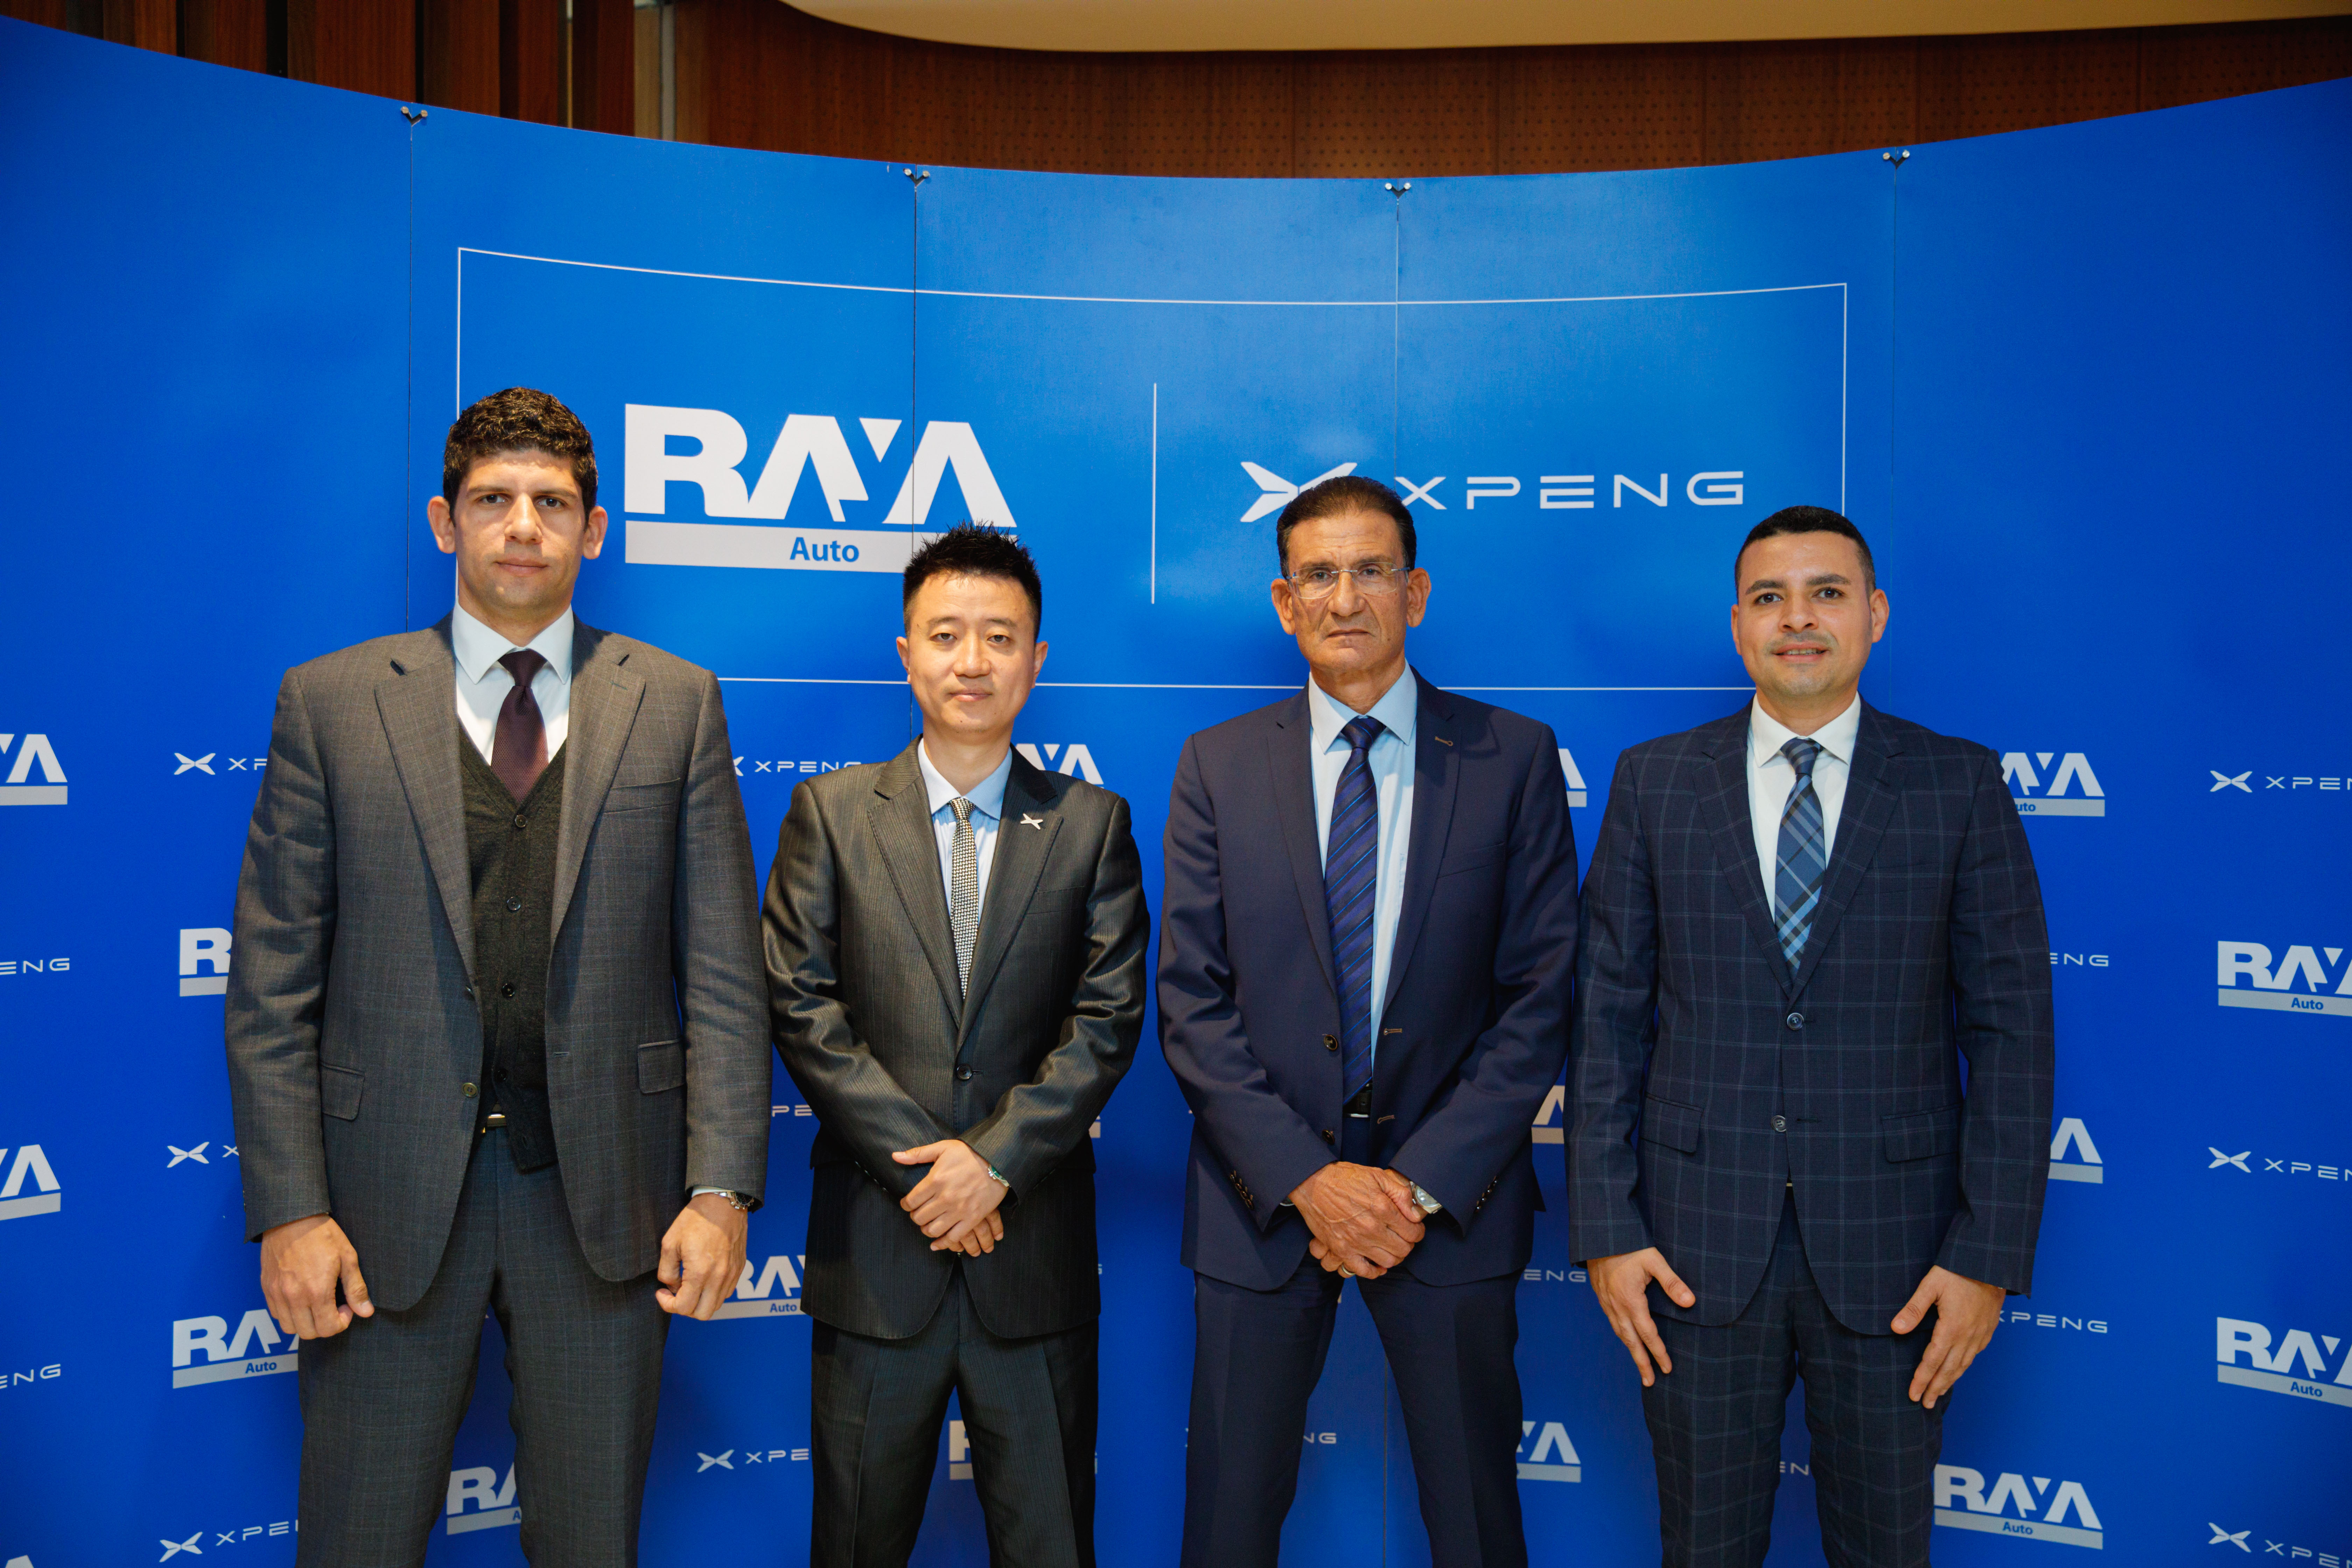 XPENG established partnership with RAYA for Egypt market